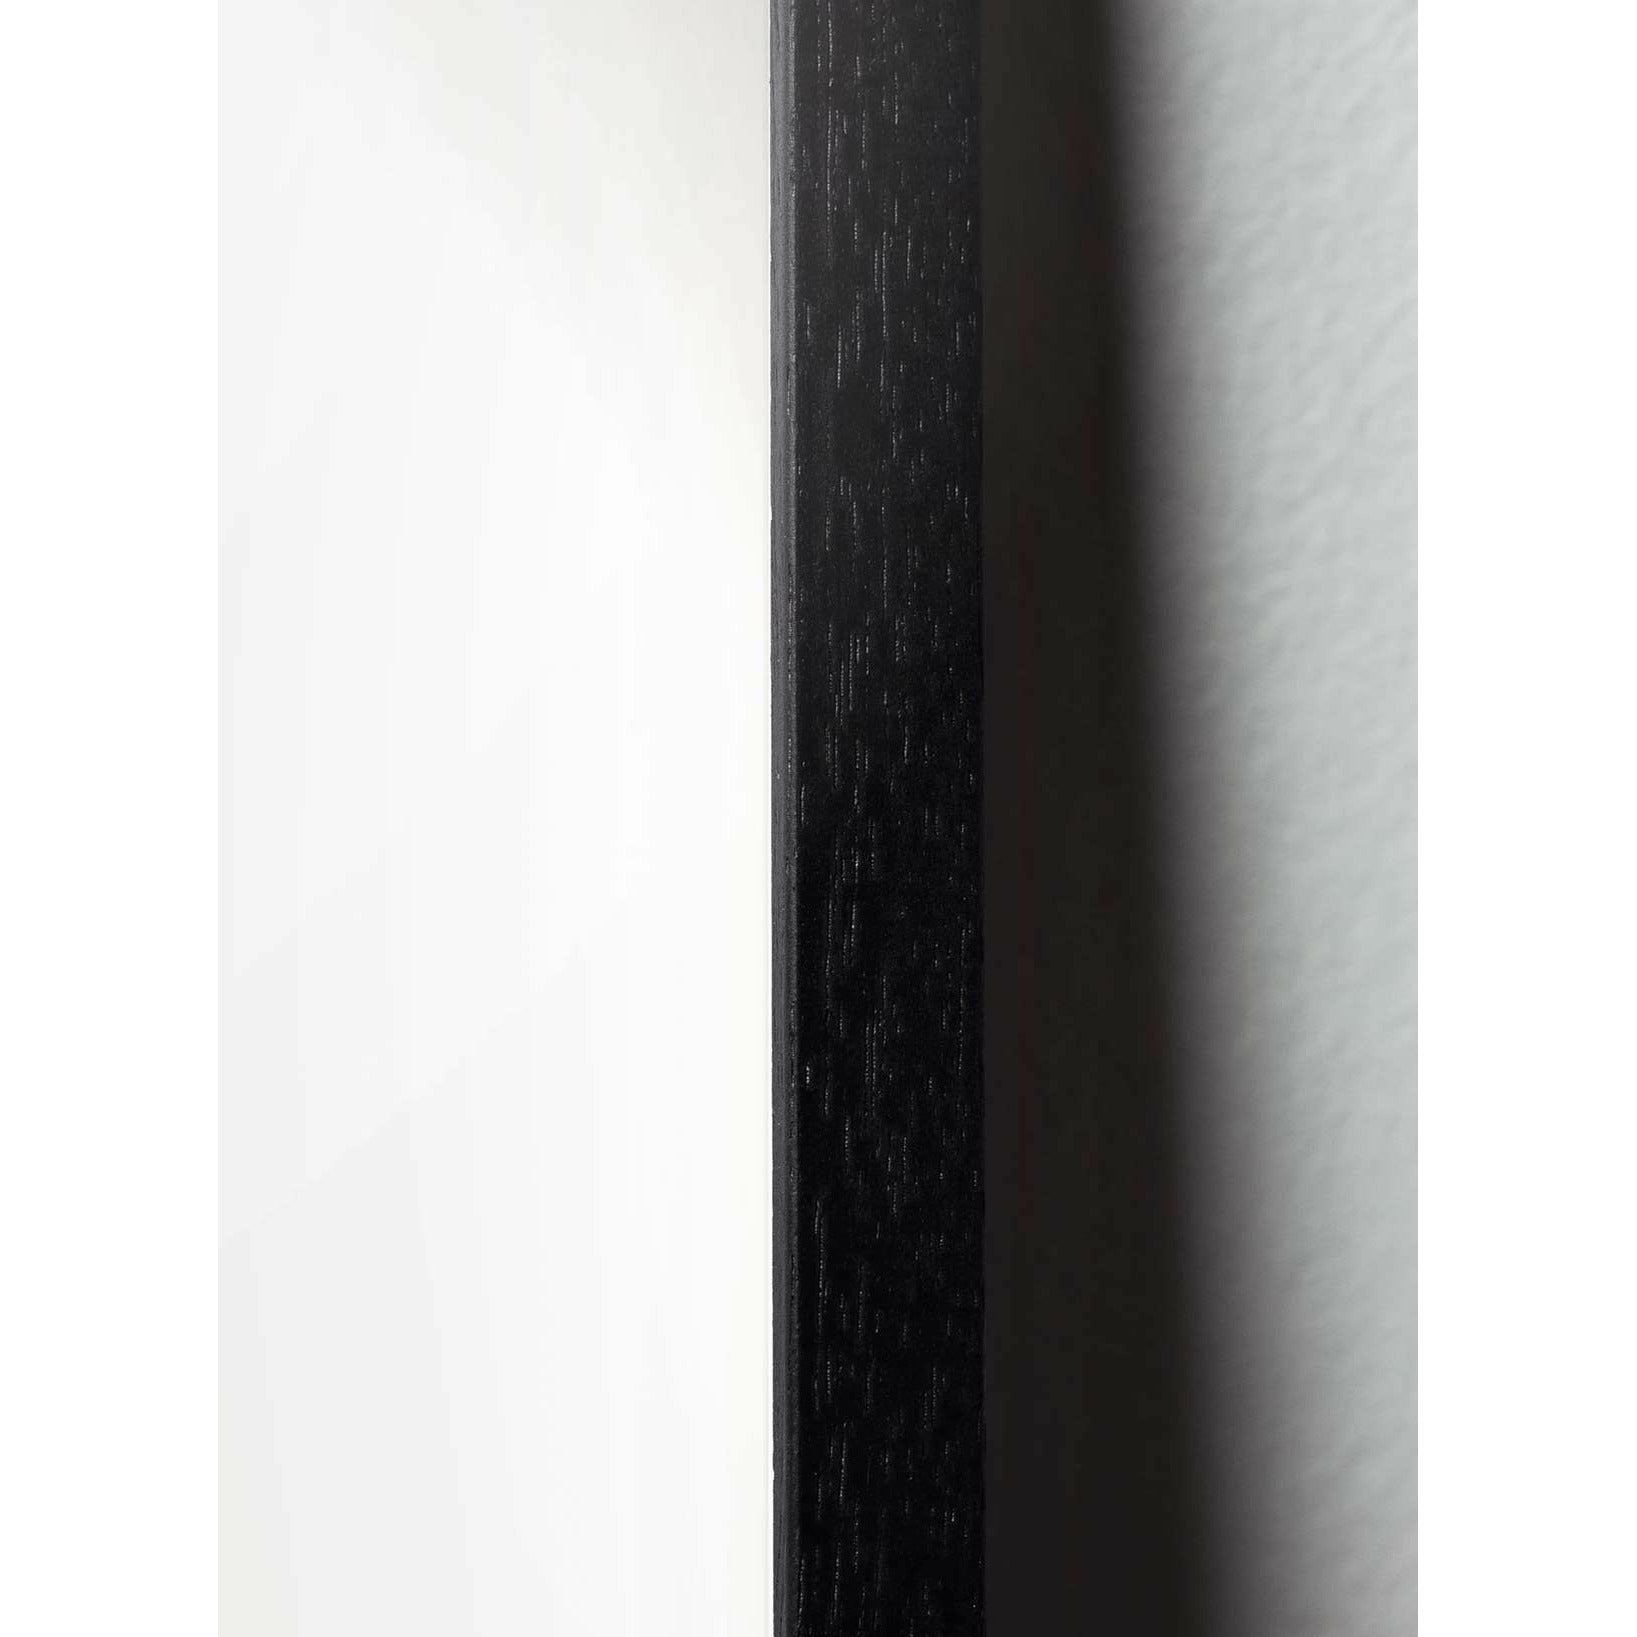 Brainchild Vinter bra klassisk affisch, ram i svart -målat trä 50x70 cm, svart bakgrund